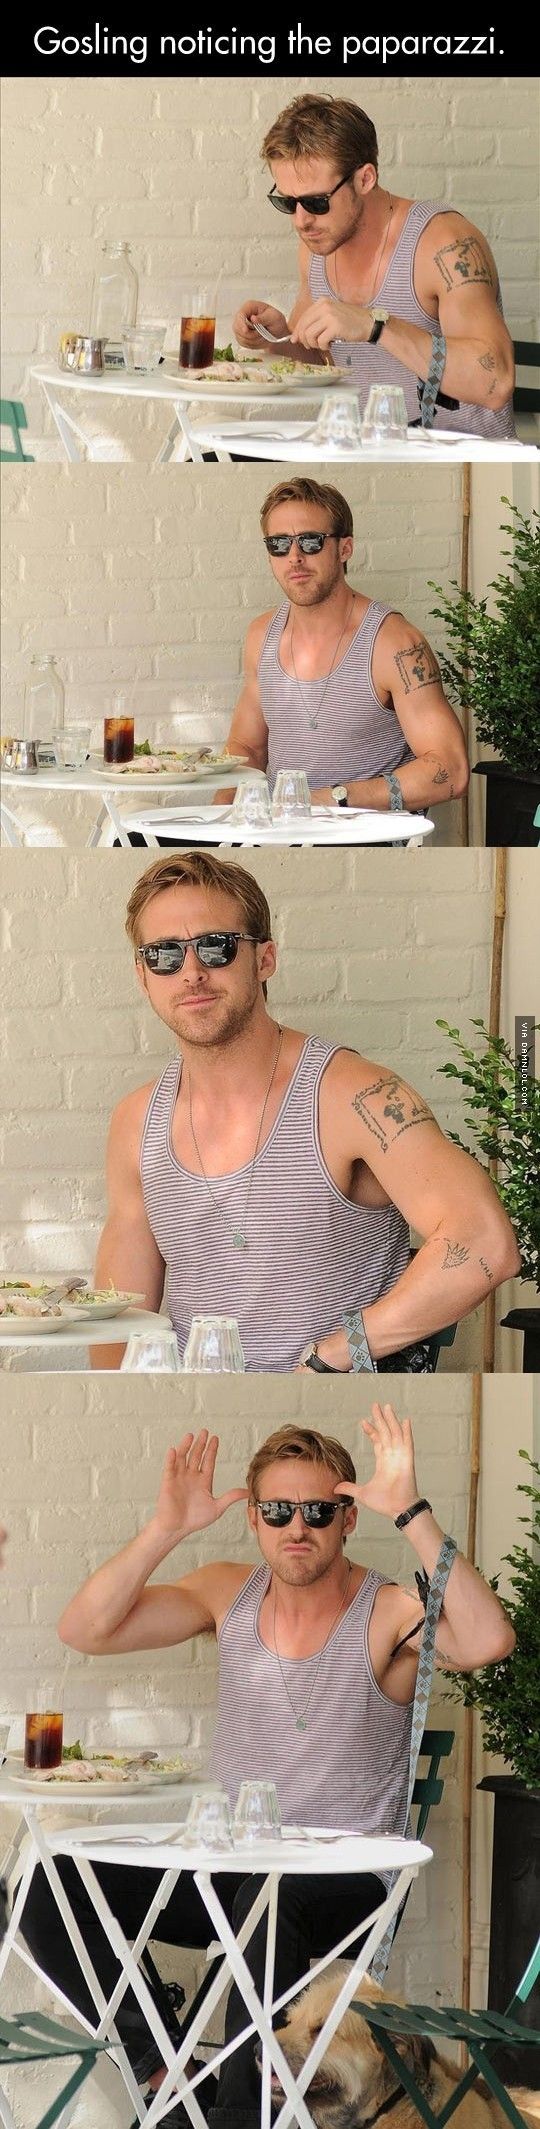 Ryan Gosling noticing the paparazzi